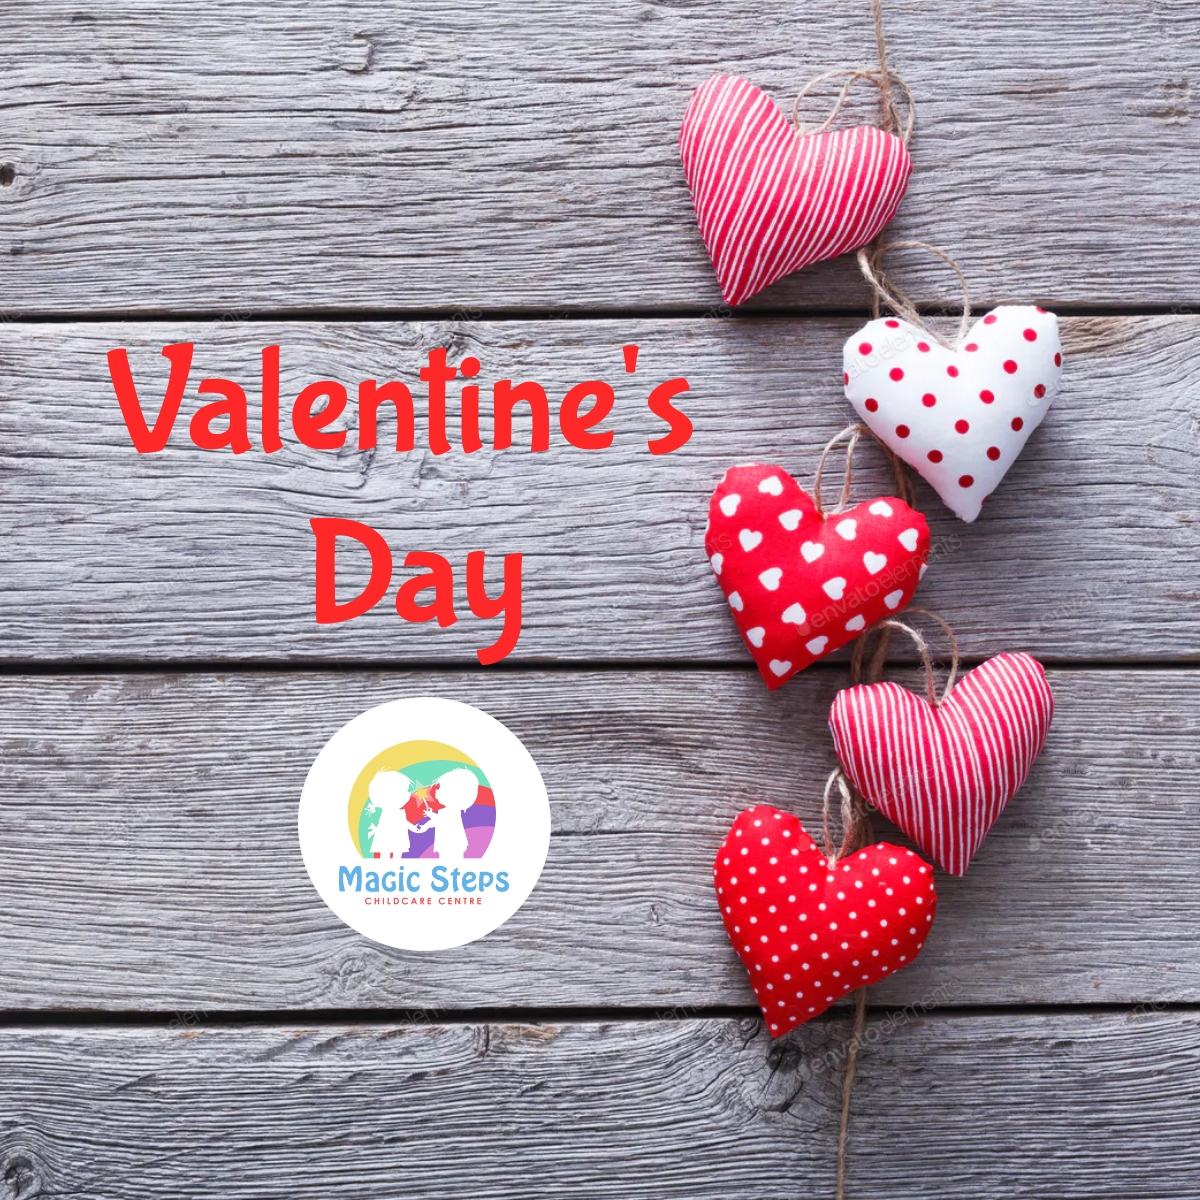 Valentine's Day- Monday 15th February